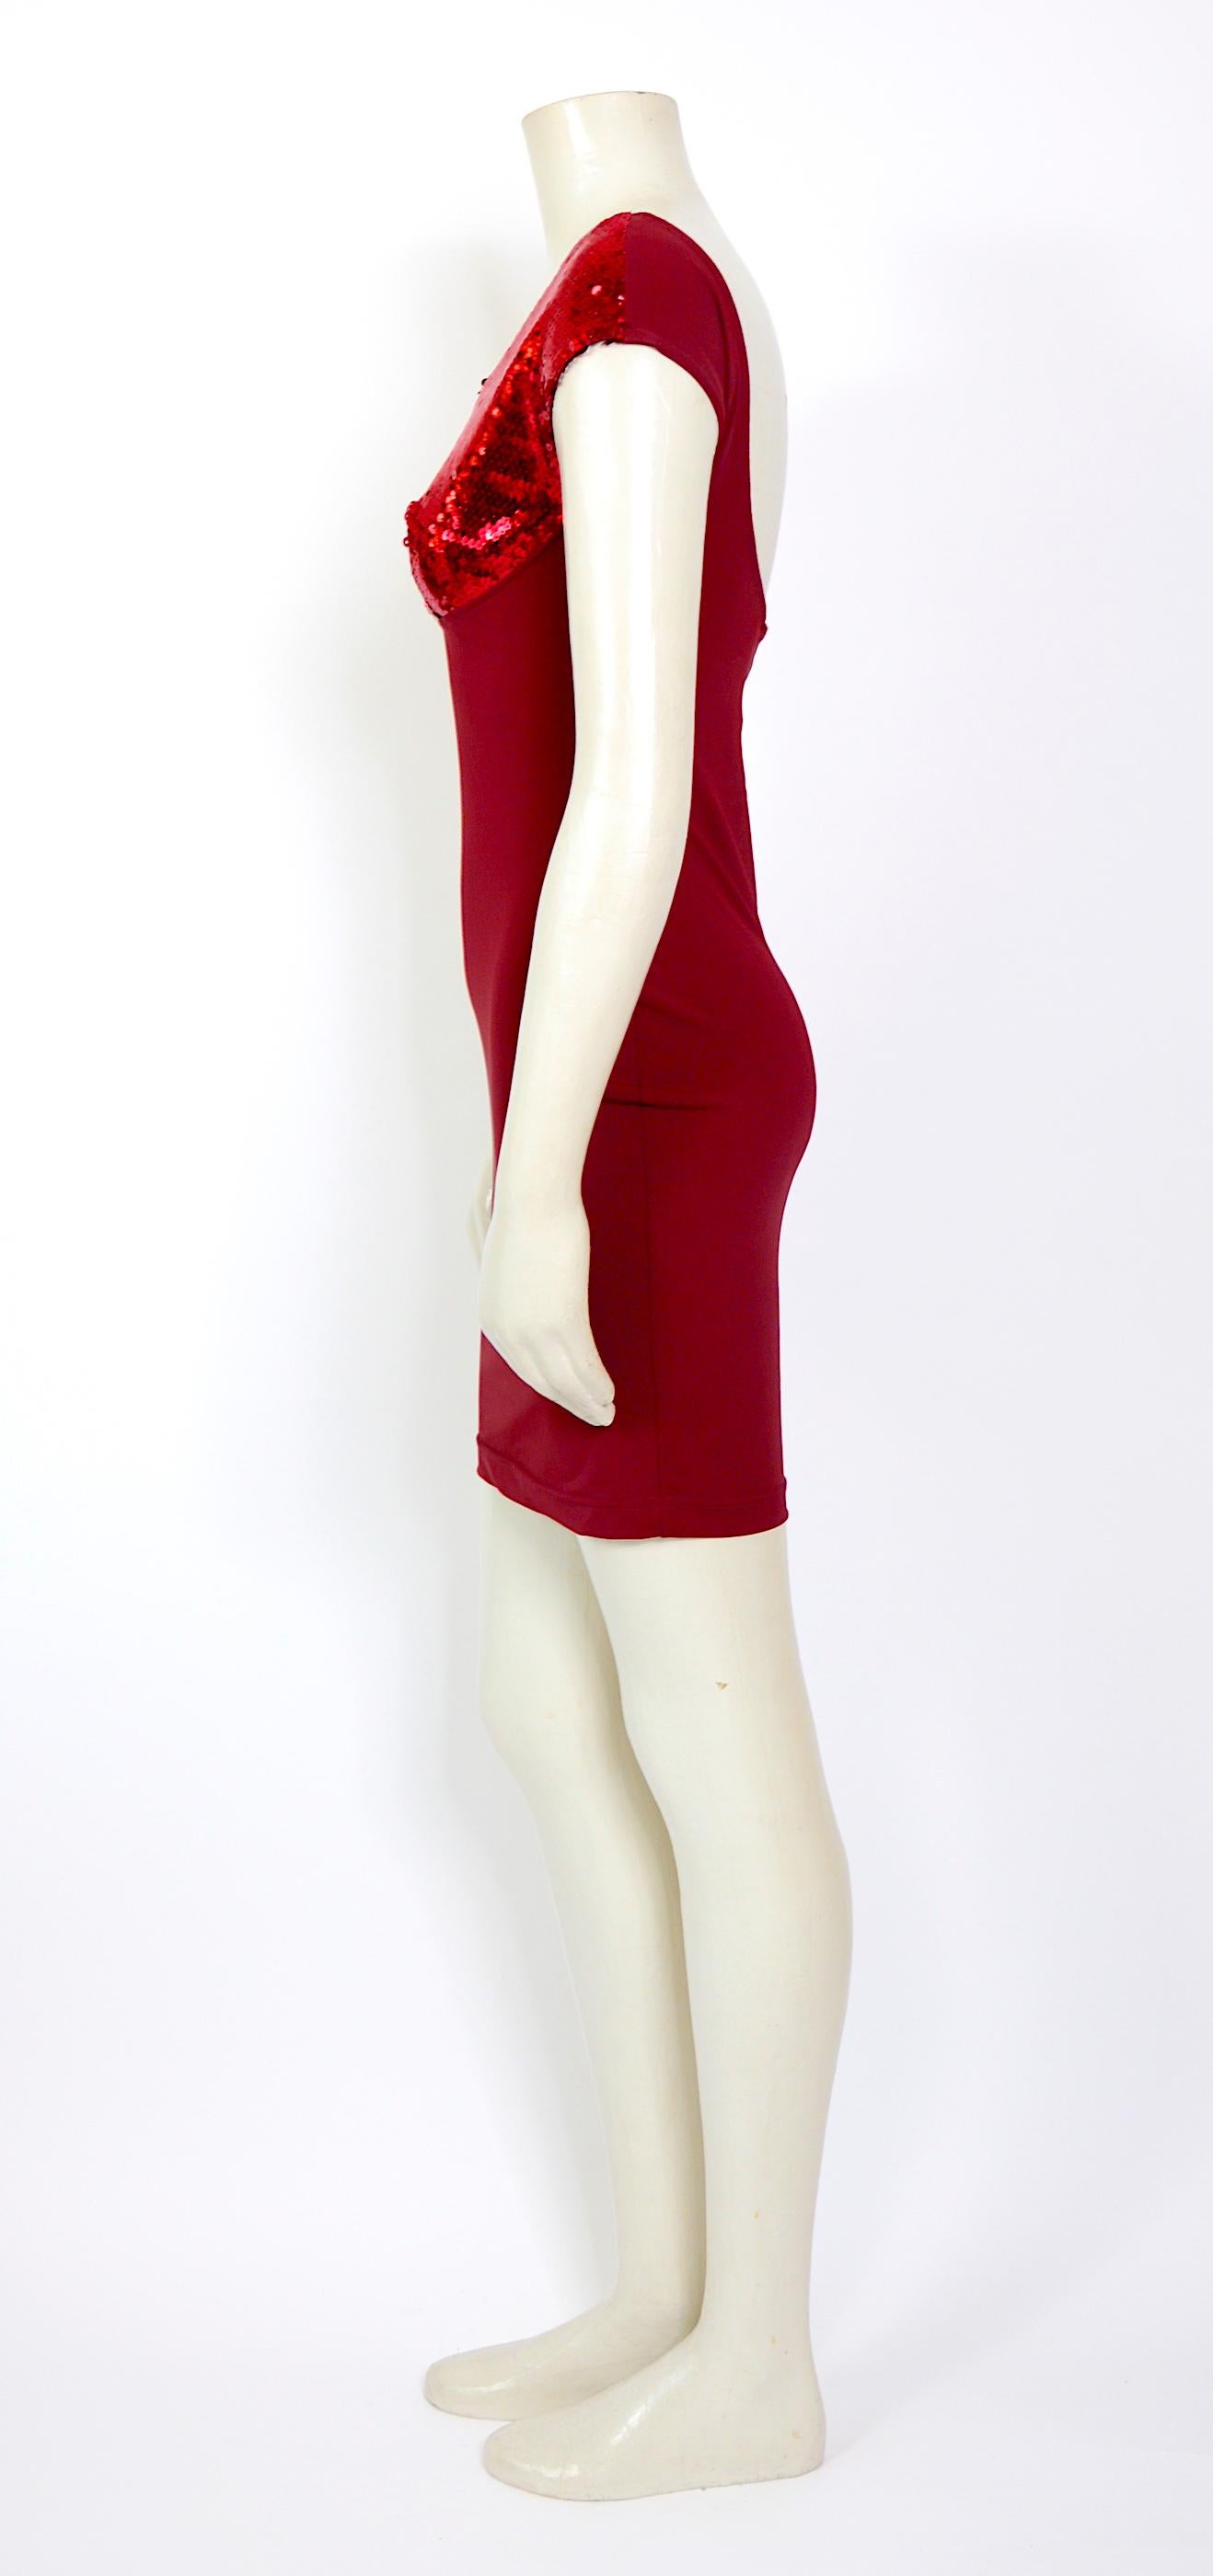 1980s red dress